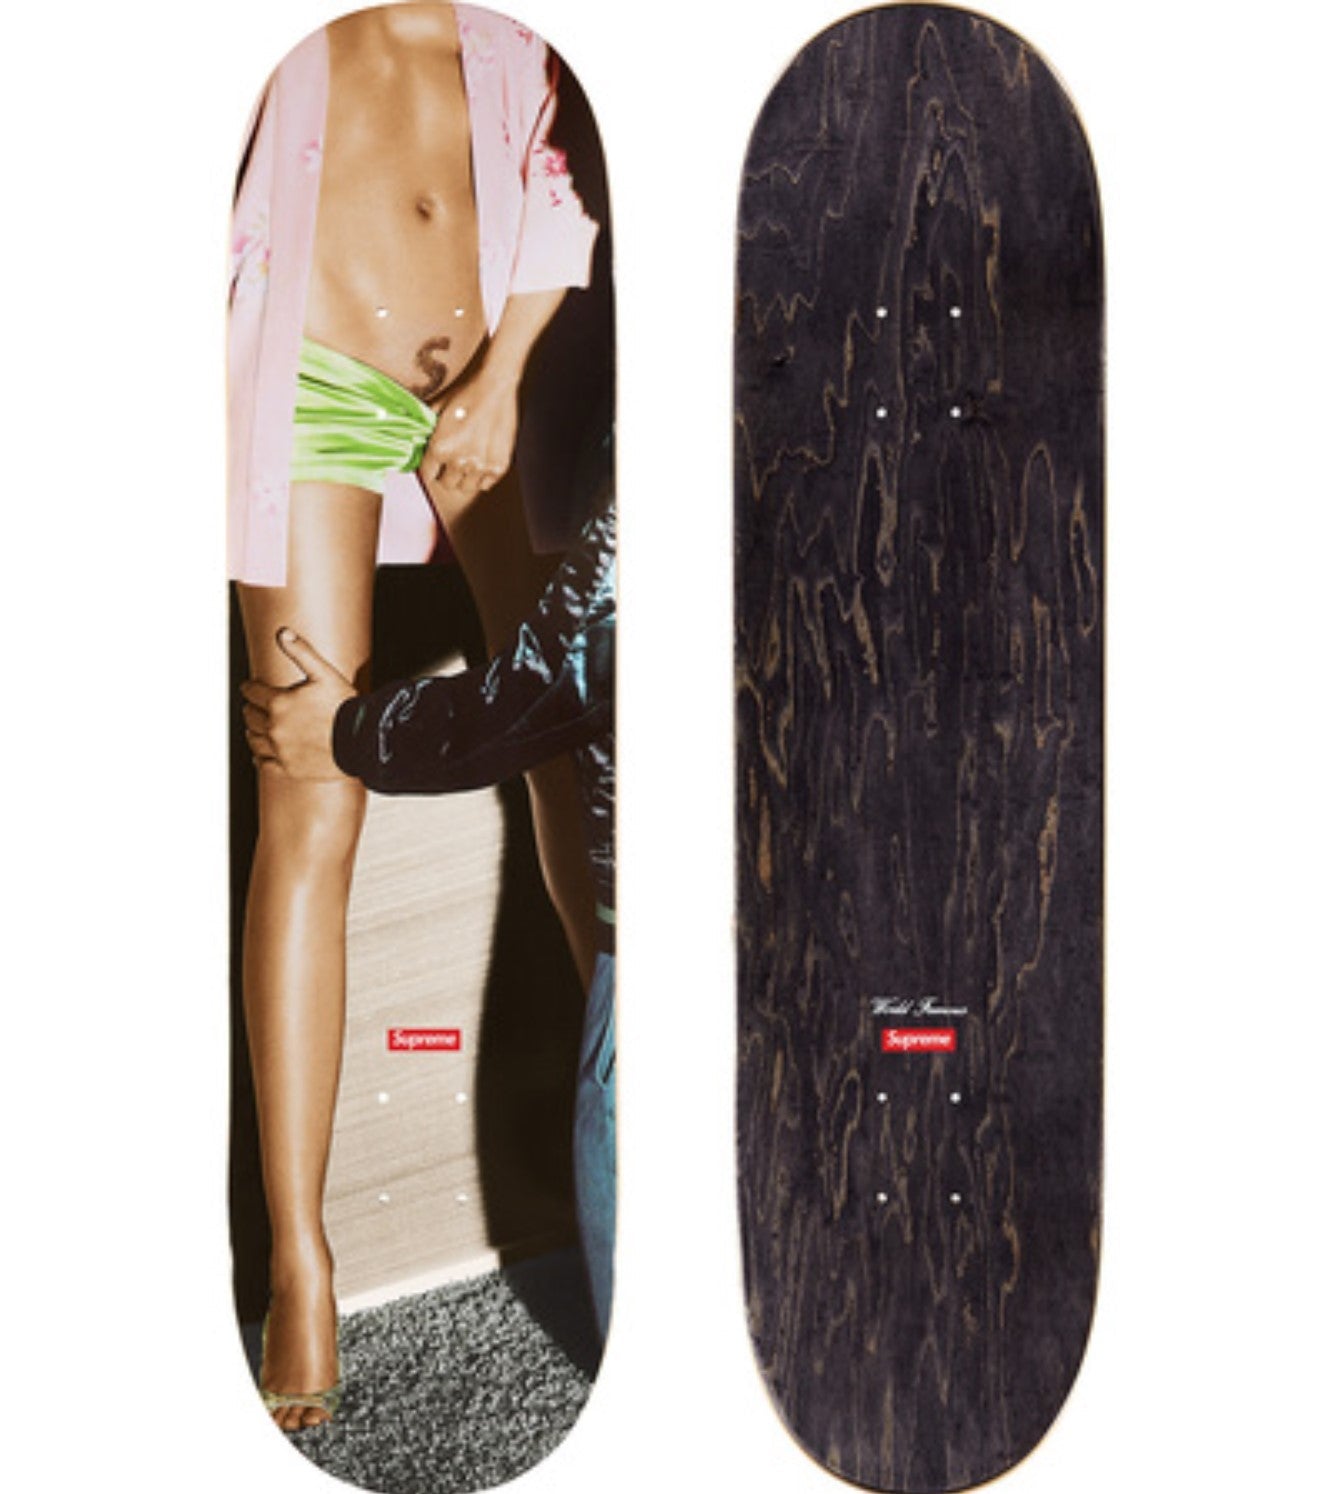 Model Skateboard Art Deck by Supreme – Sprayed Paint Art Collection